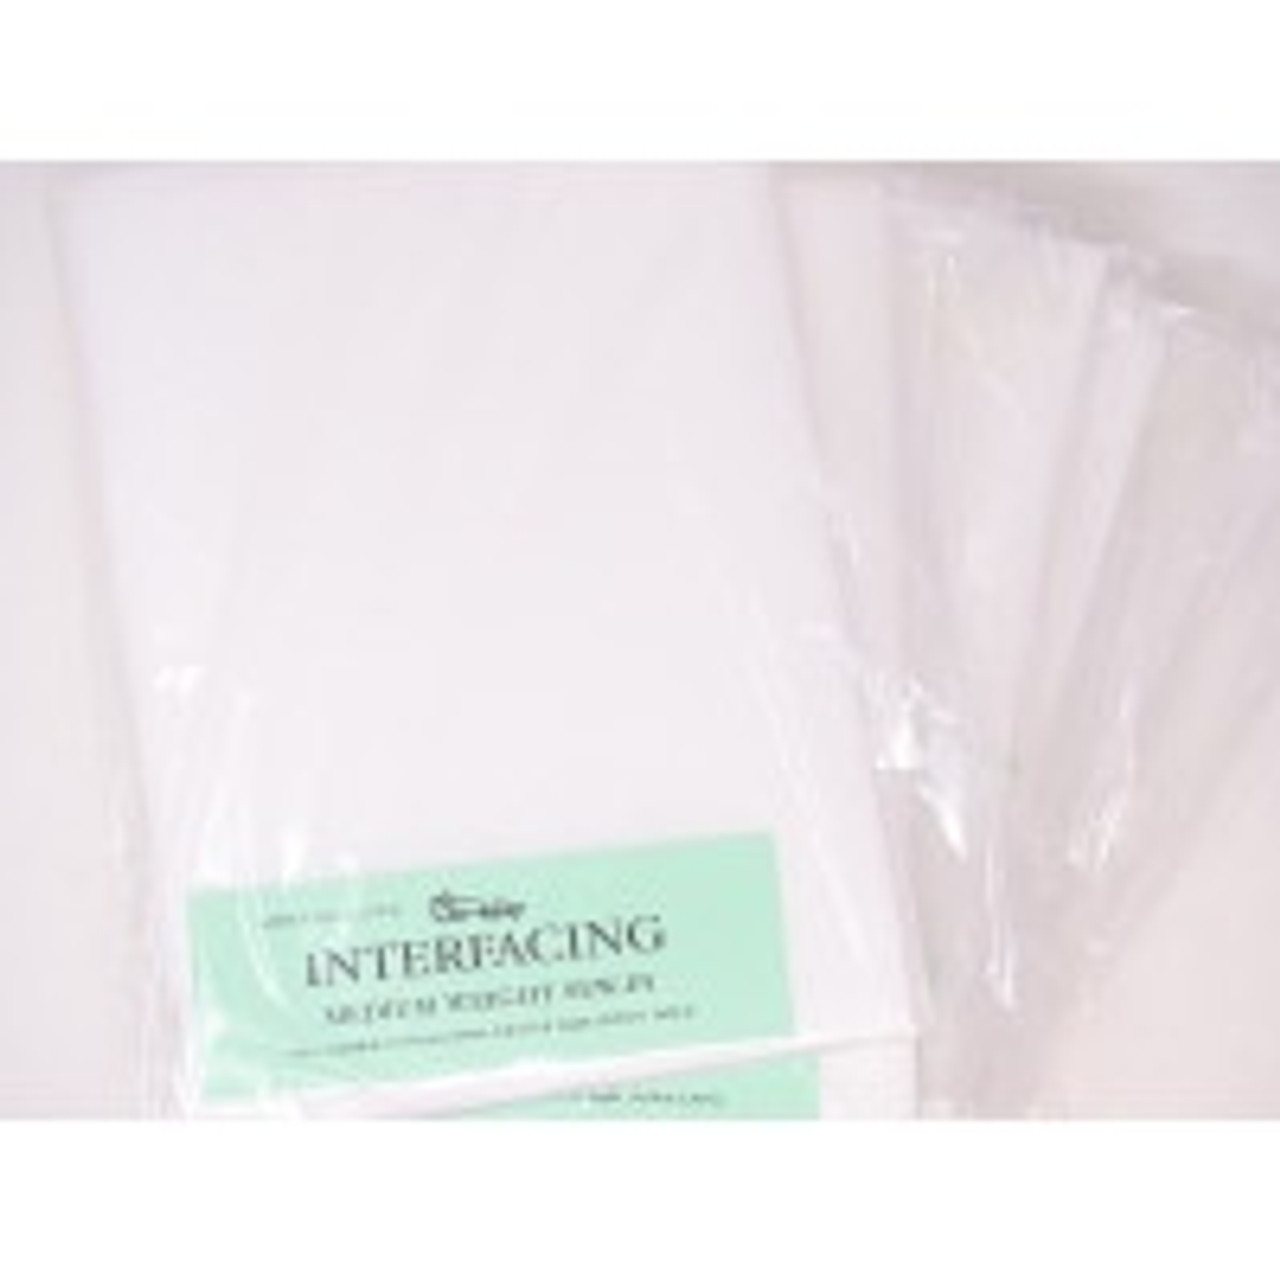 Medium Weight Sew-in Interfacing Sheet (69cm x 92cm Sheet)